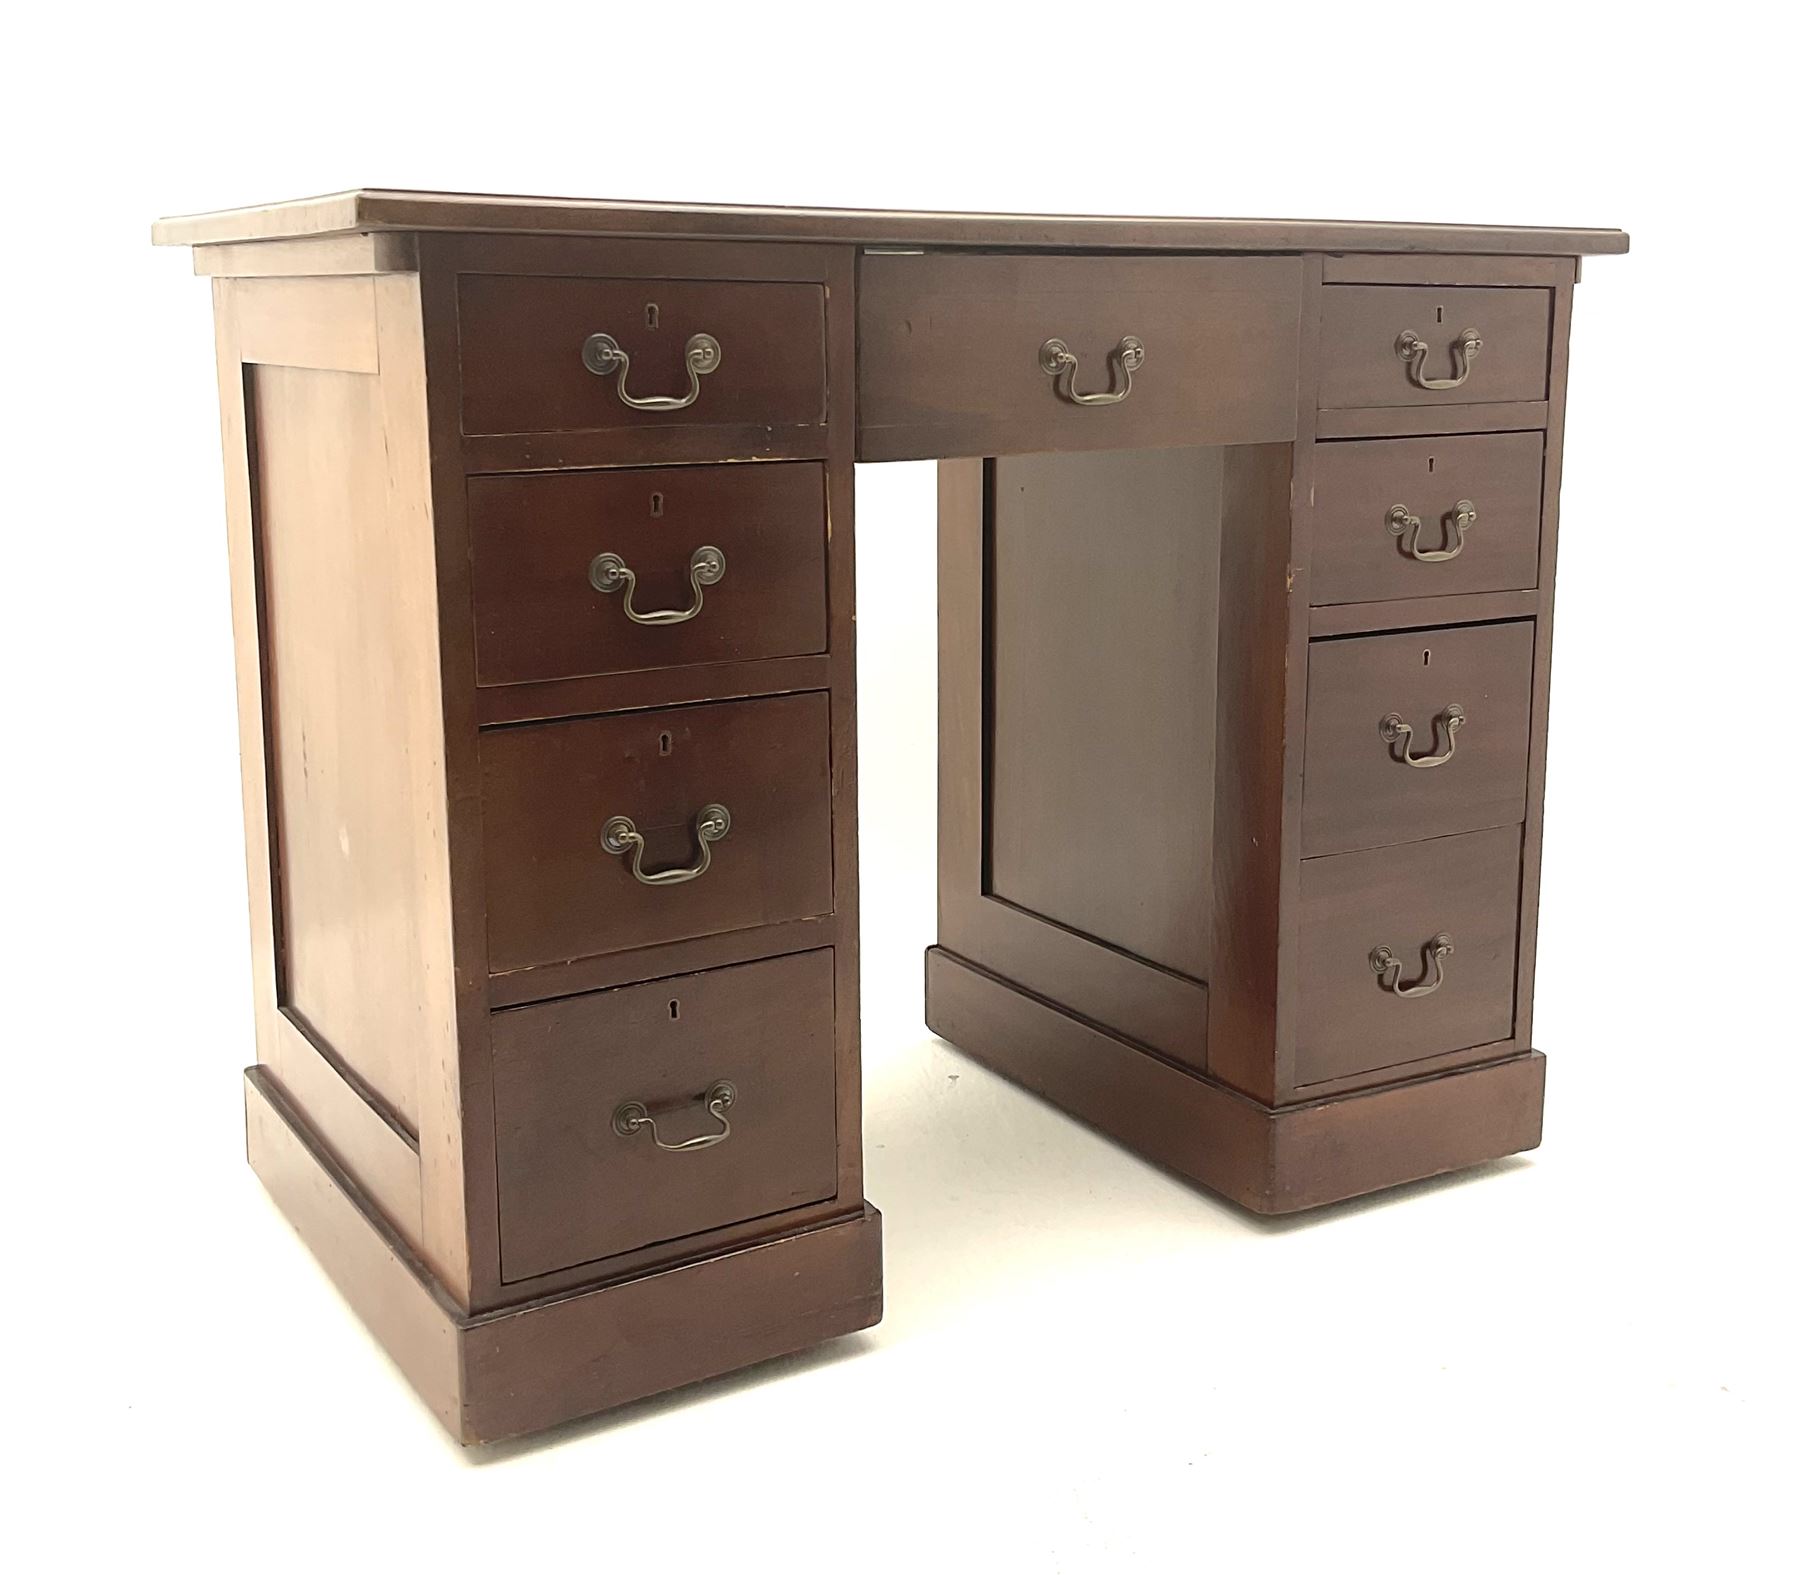 Late 20th century mahogany Kneehole desk - Image 4 of 4